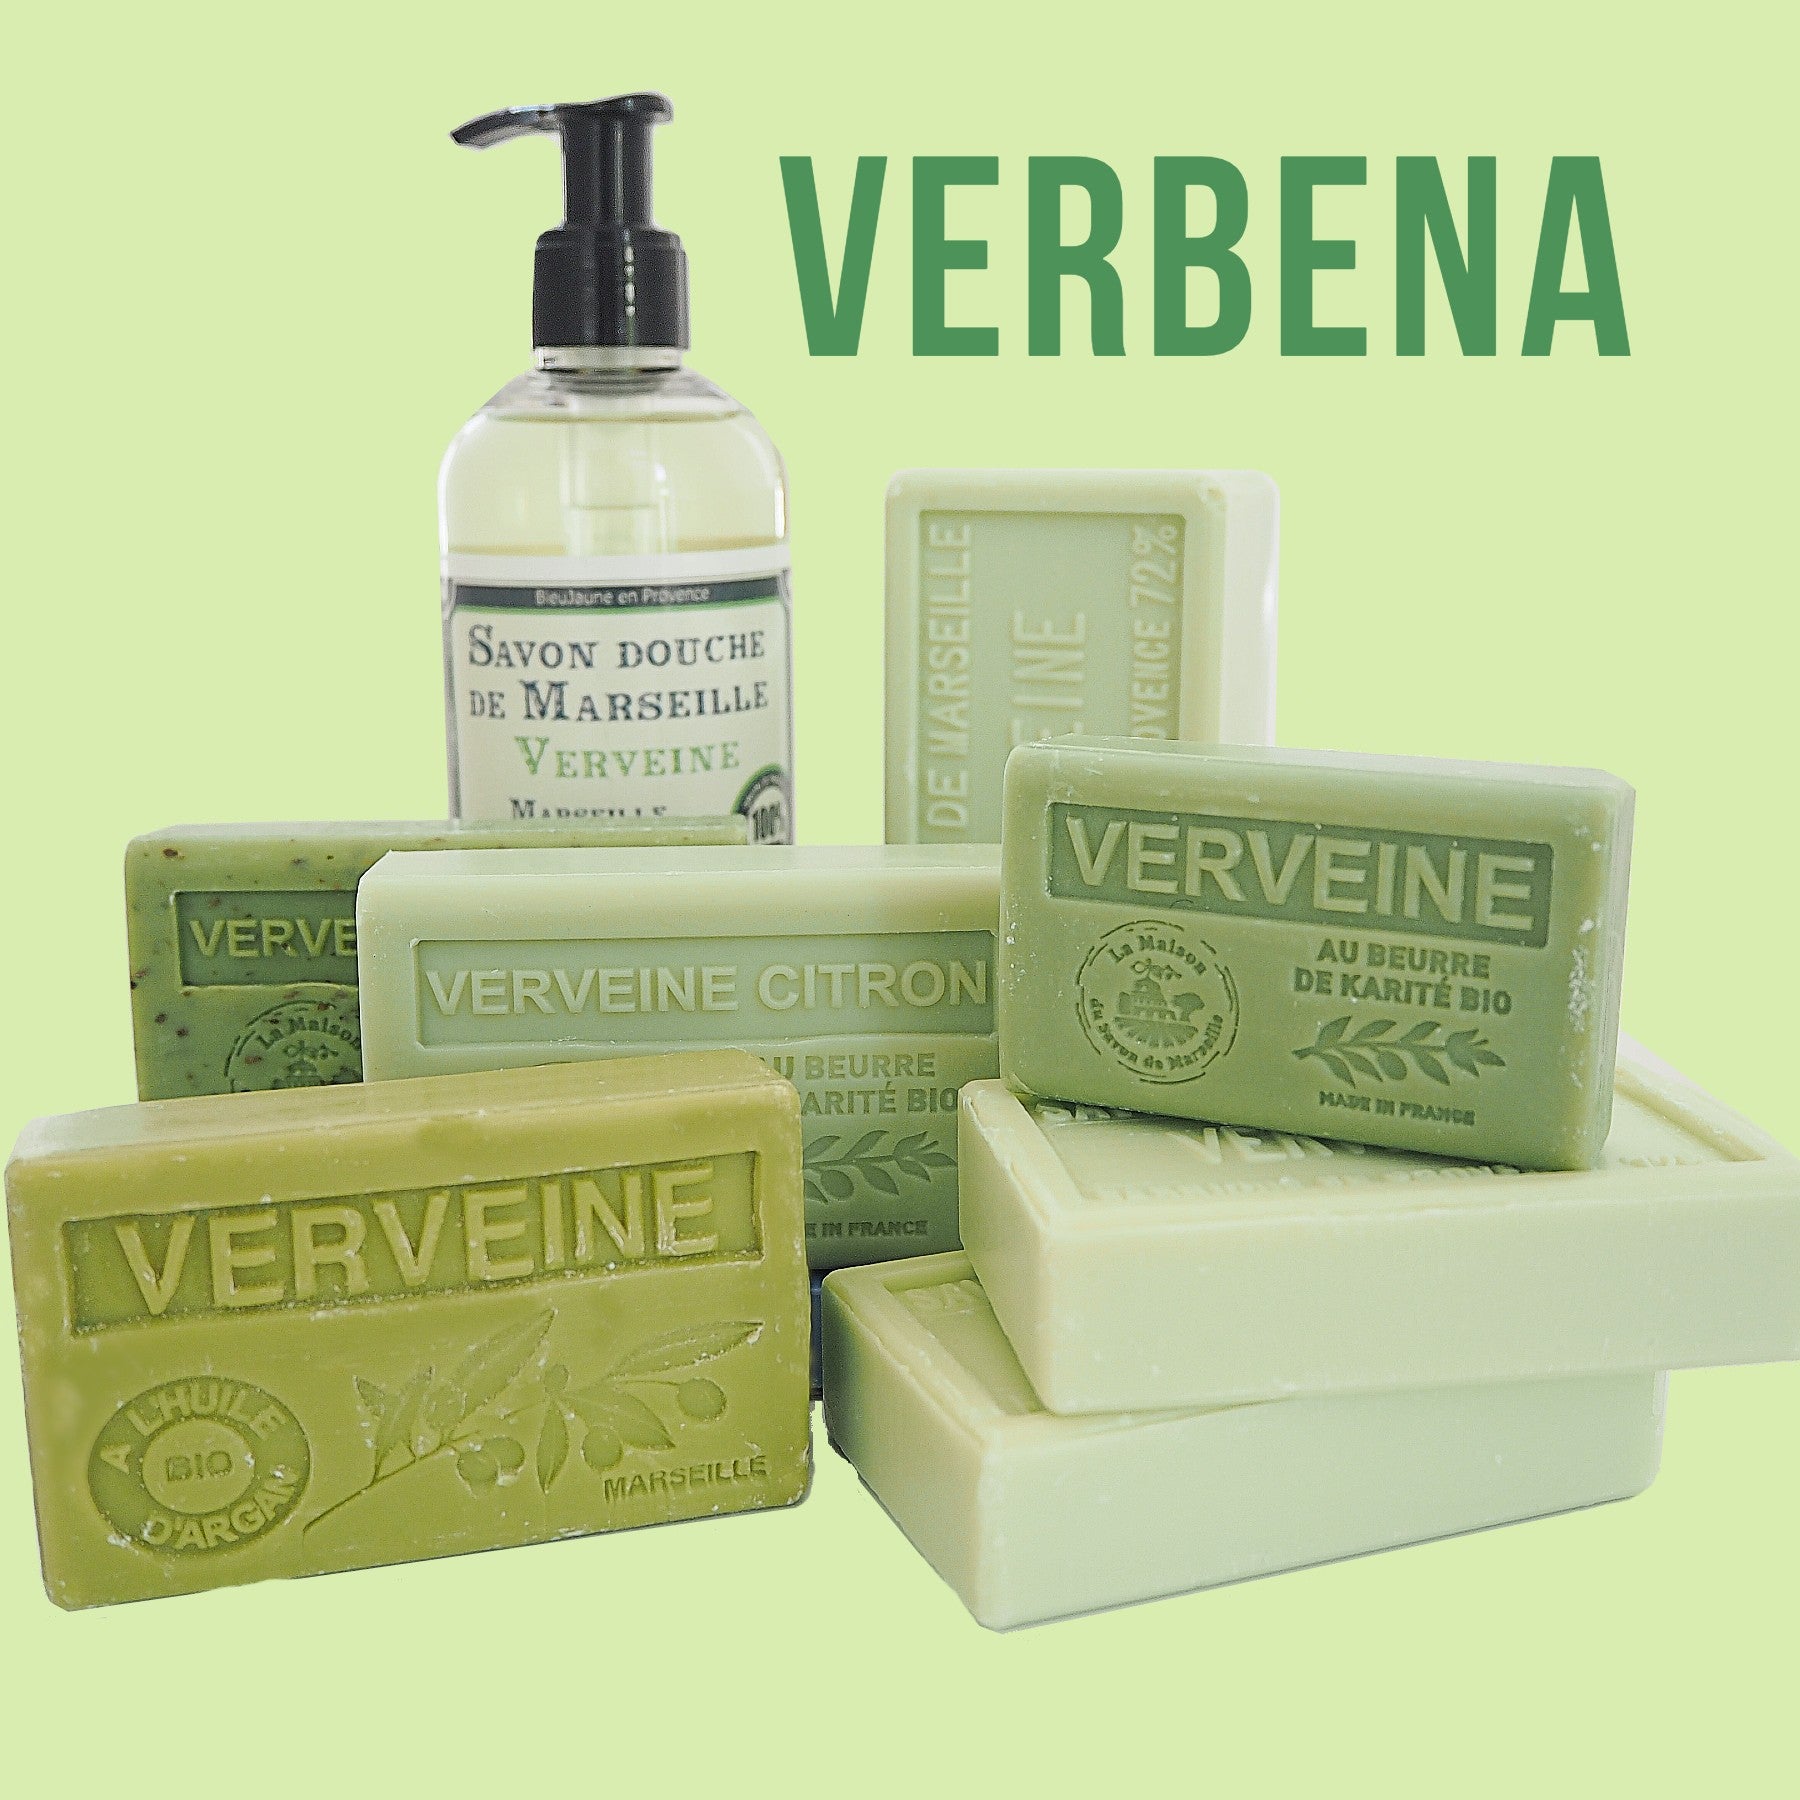 Ingredients spotlight - VERBENA